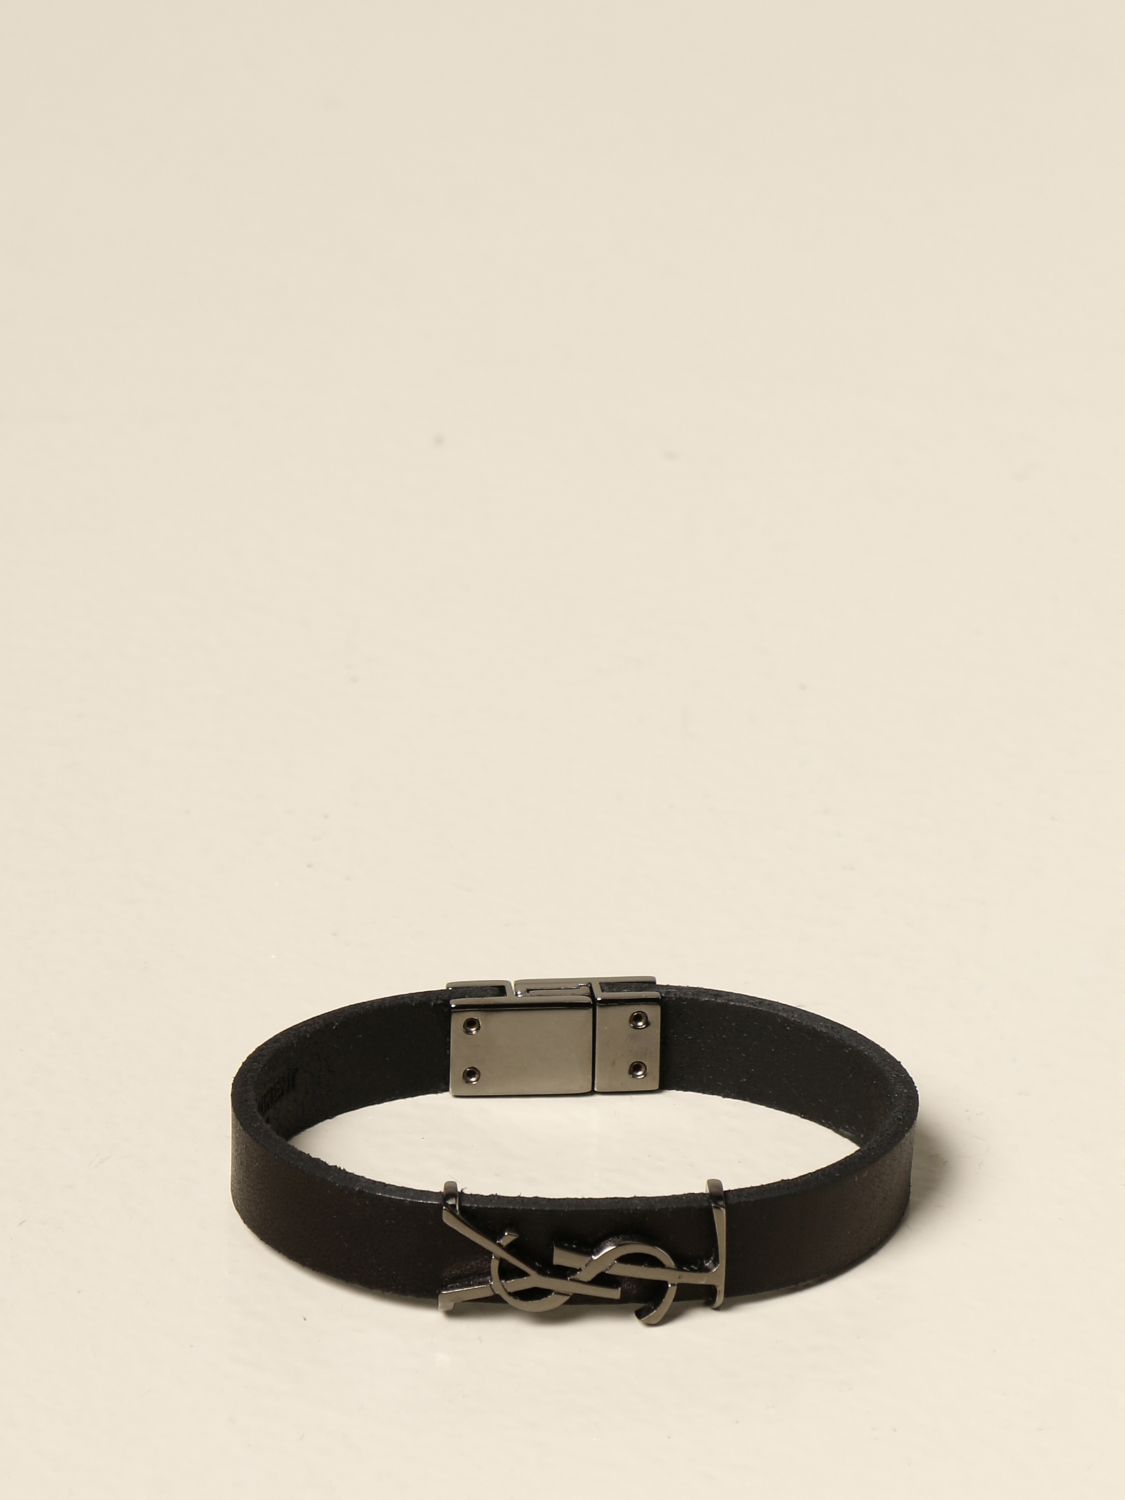 Saint Laurent Leather Ysl Monogram Bracelet, Black, Size Small